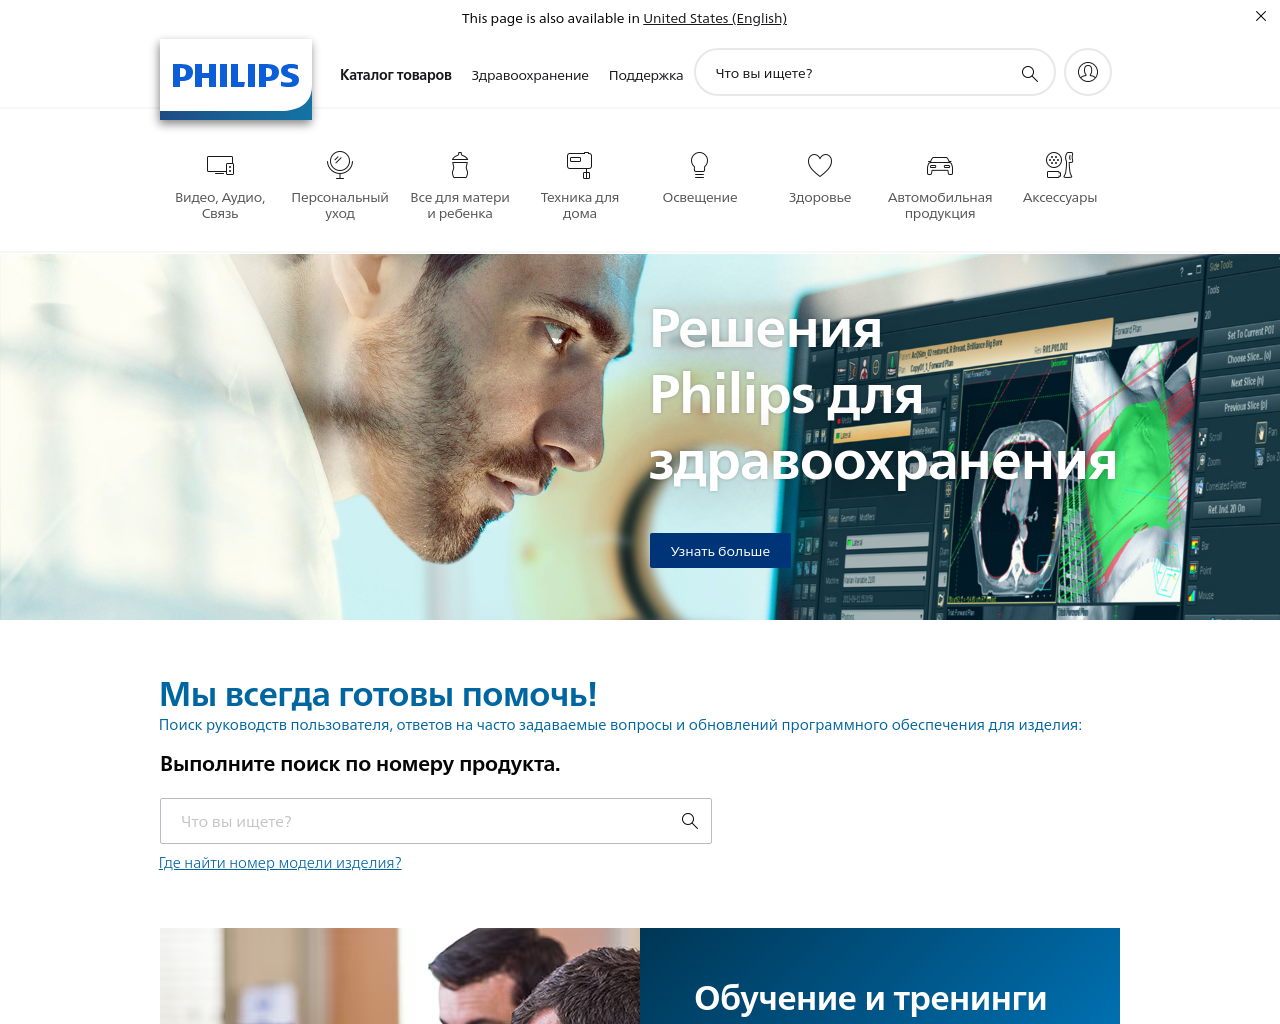 philips.ru